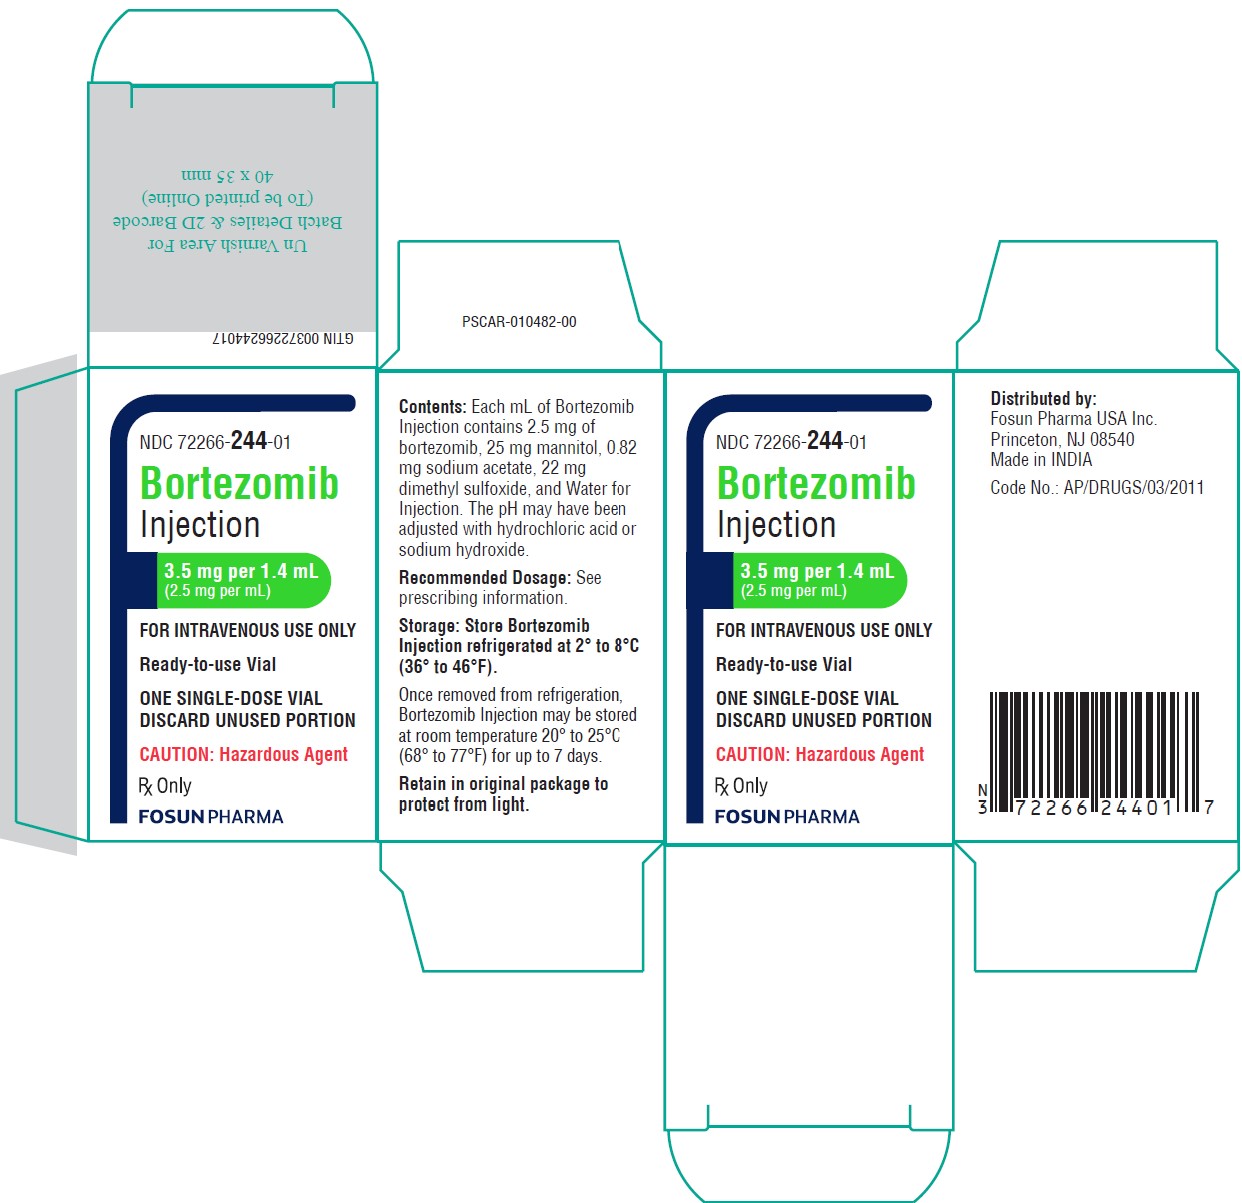 Carton Label 2.5 mg